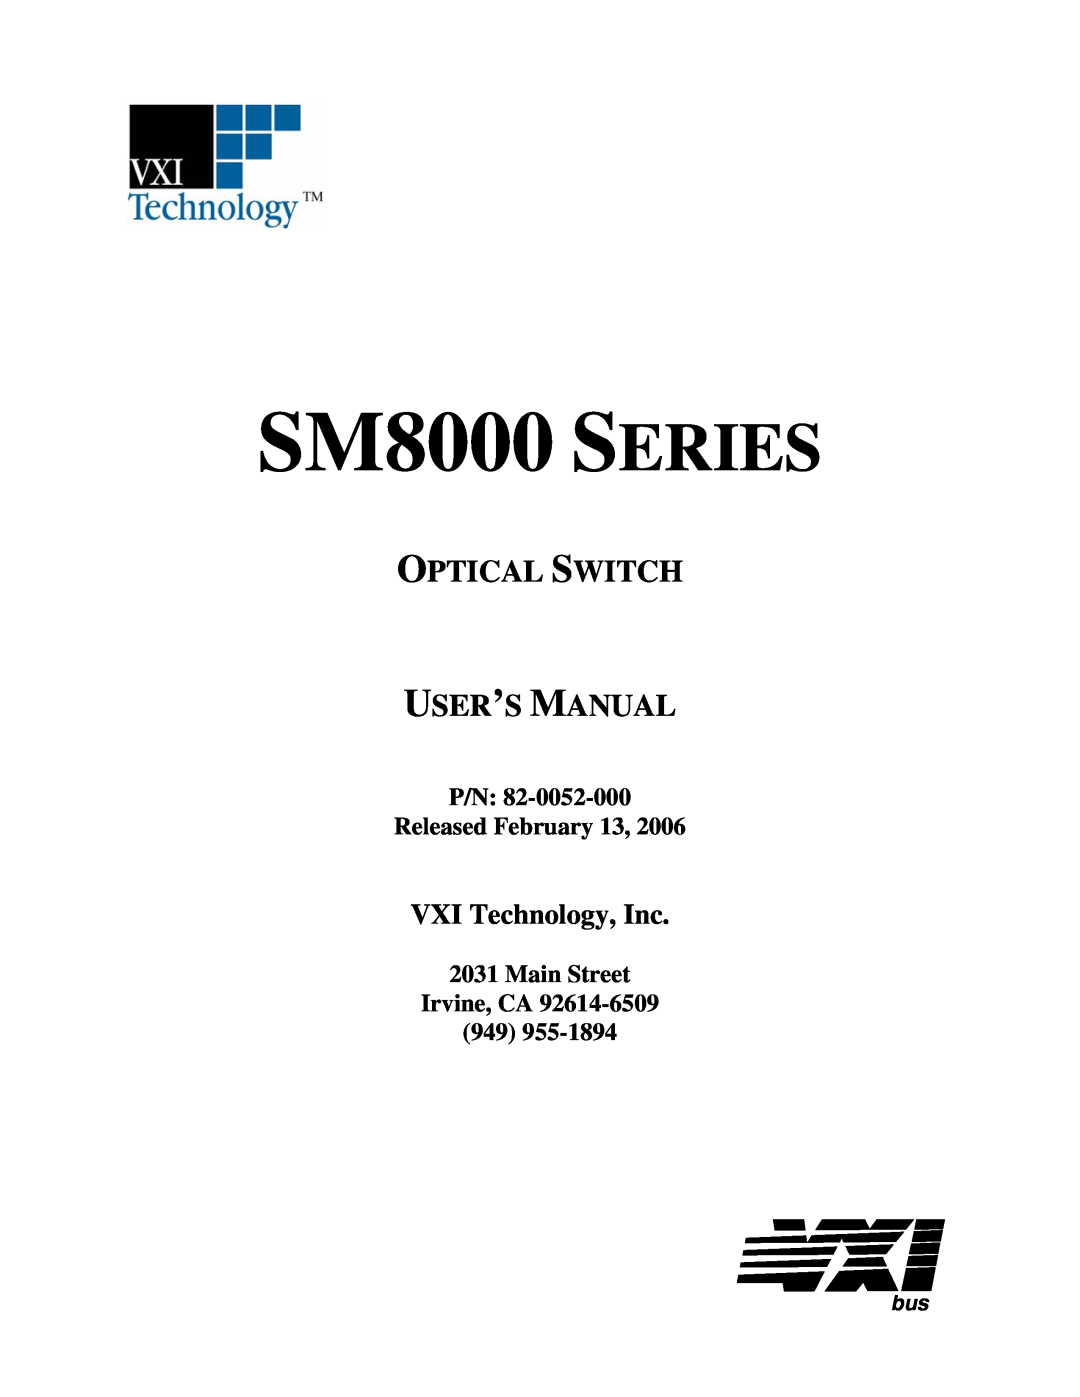 VXI user manual VXI Technology, Inc, P/N Released February 13, Main Street Irvine, CA 949, SM8000 SERIES 